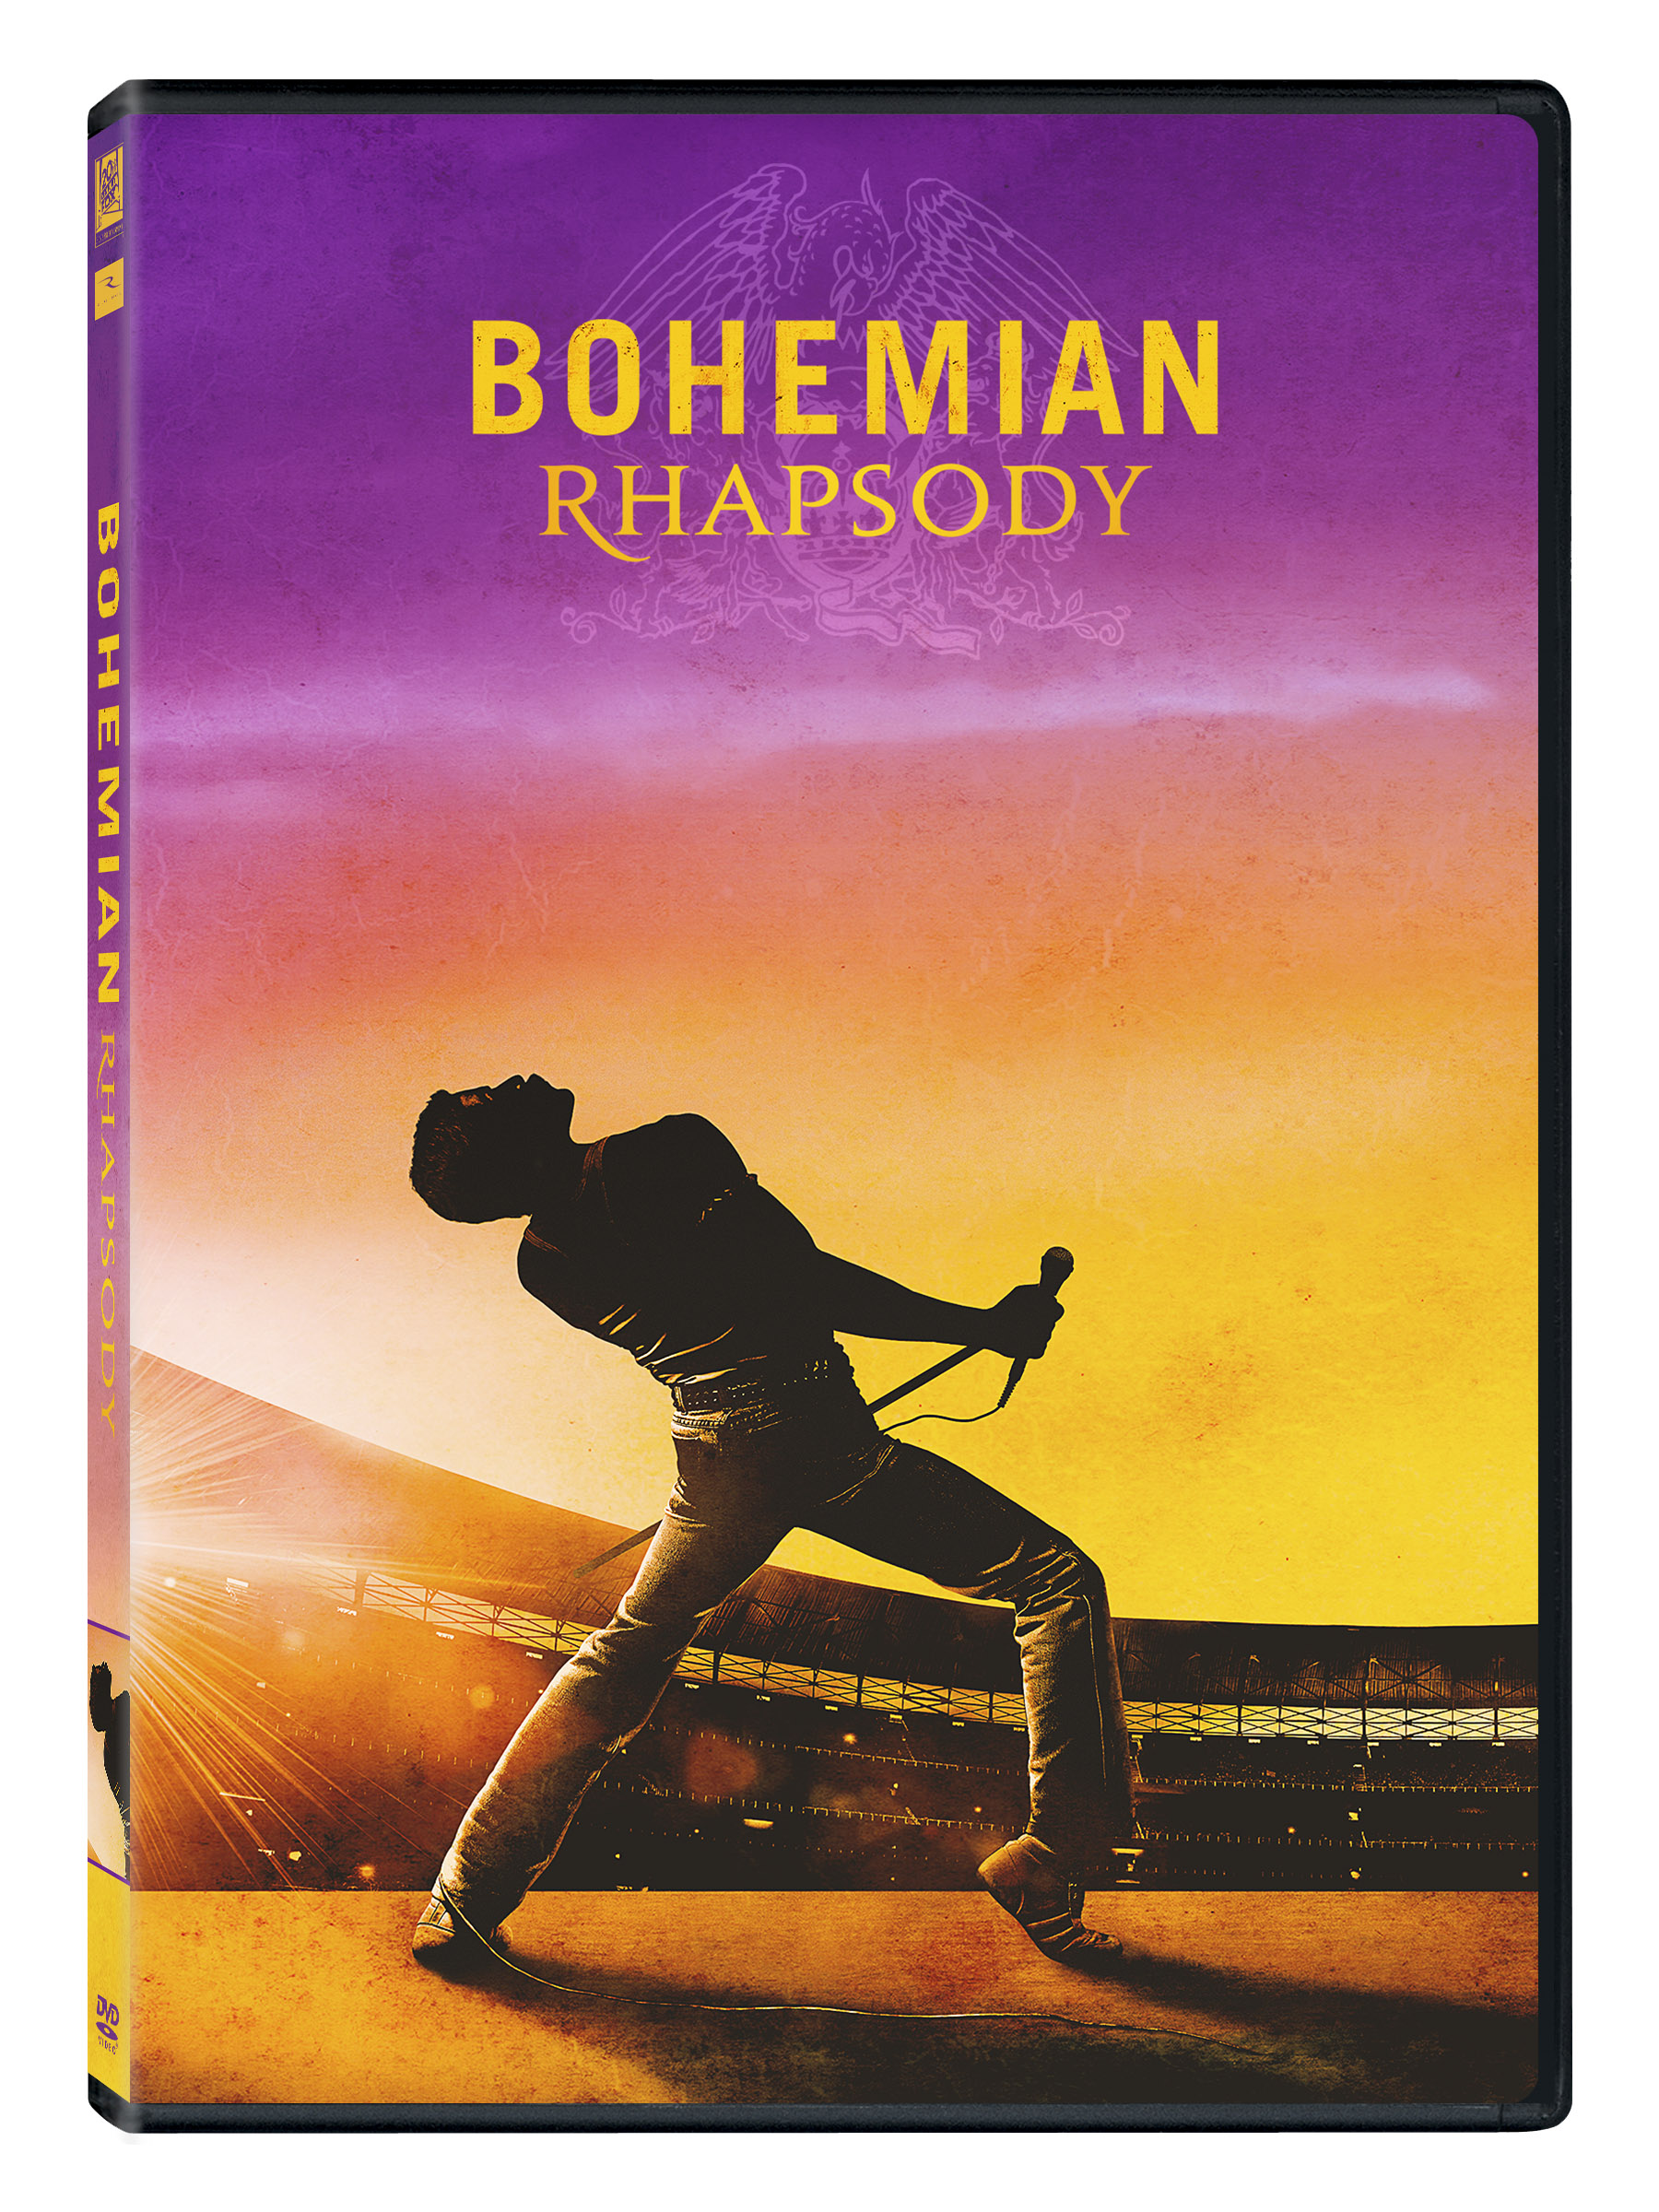 Bohemian Rhapsody DVD cover (20th Century Fox Home Entertainment)